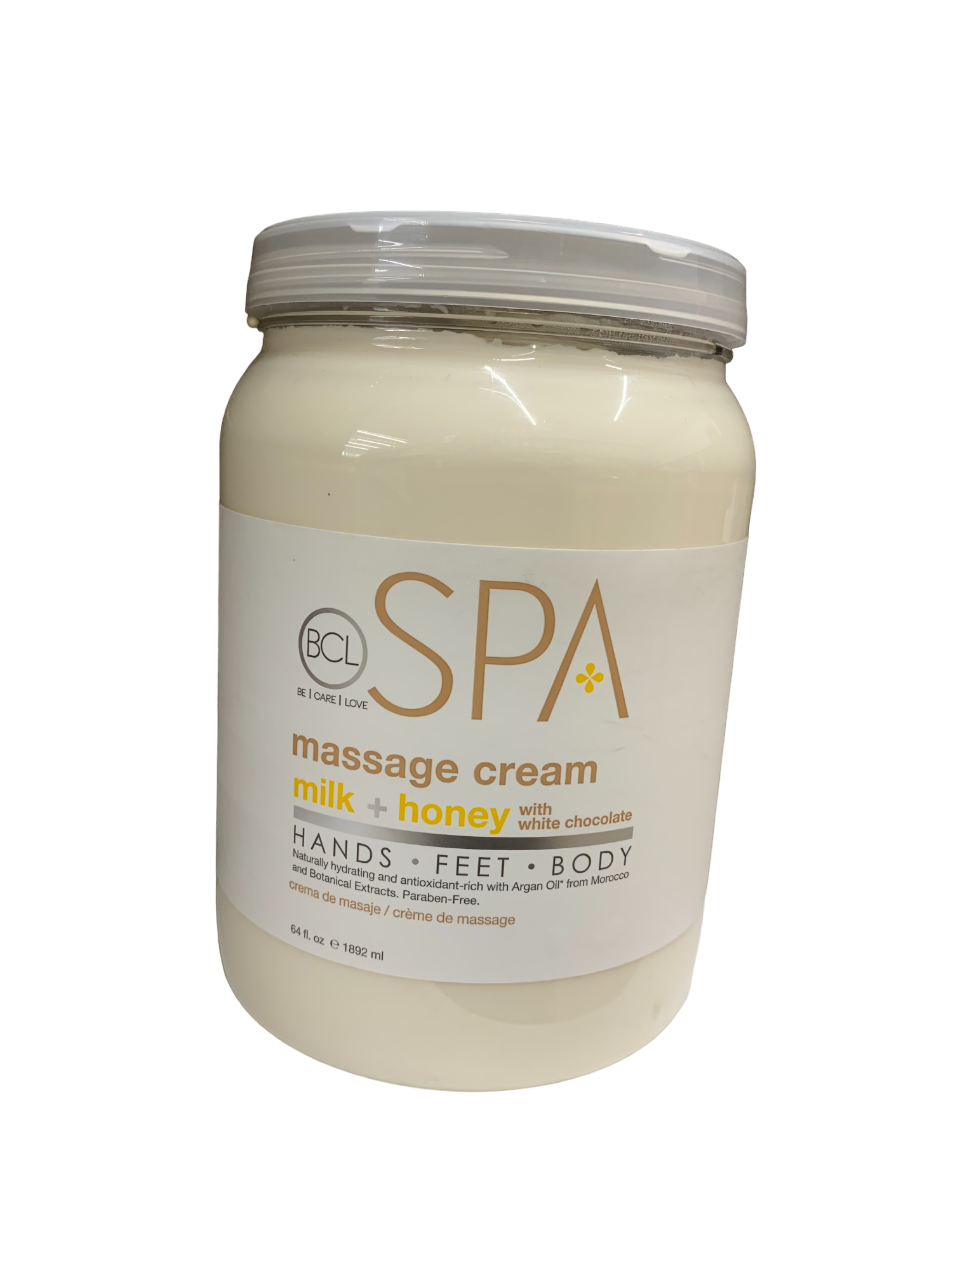 BCL Spa Massage Cream Milk Honey with White Chocolate